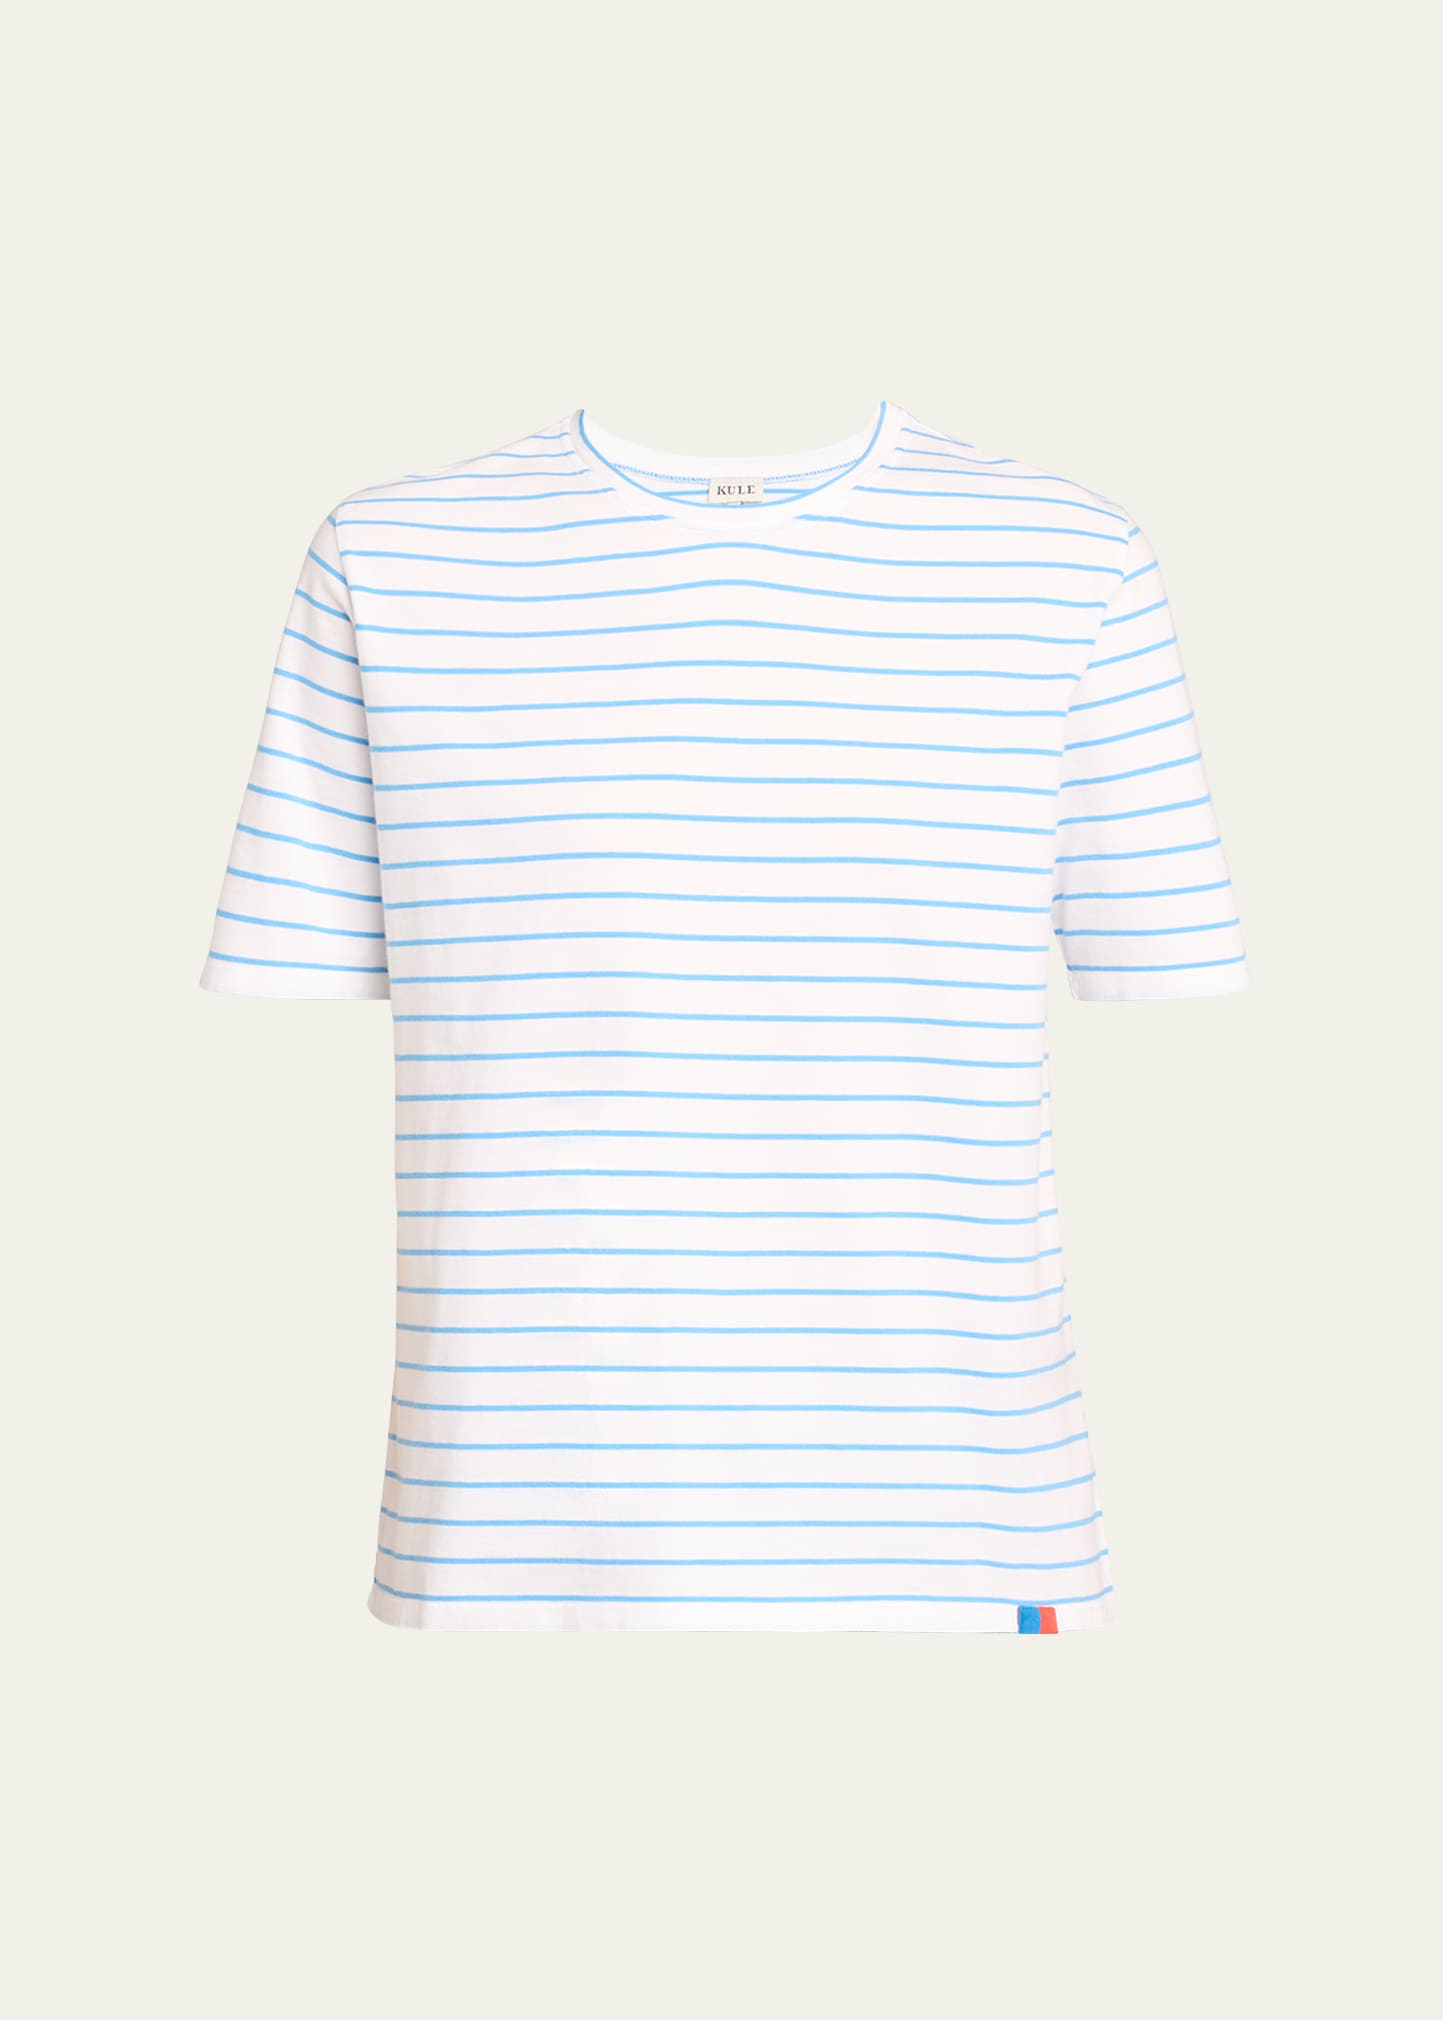 The Modern Cotton Stripe Short-Sleeve T-Shirt